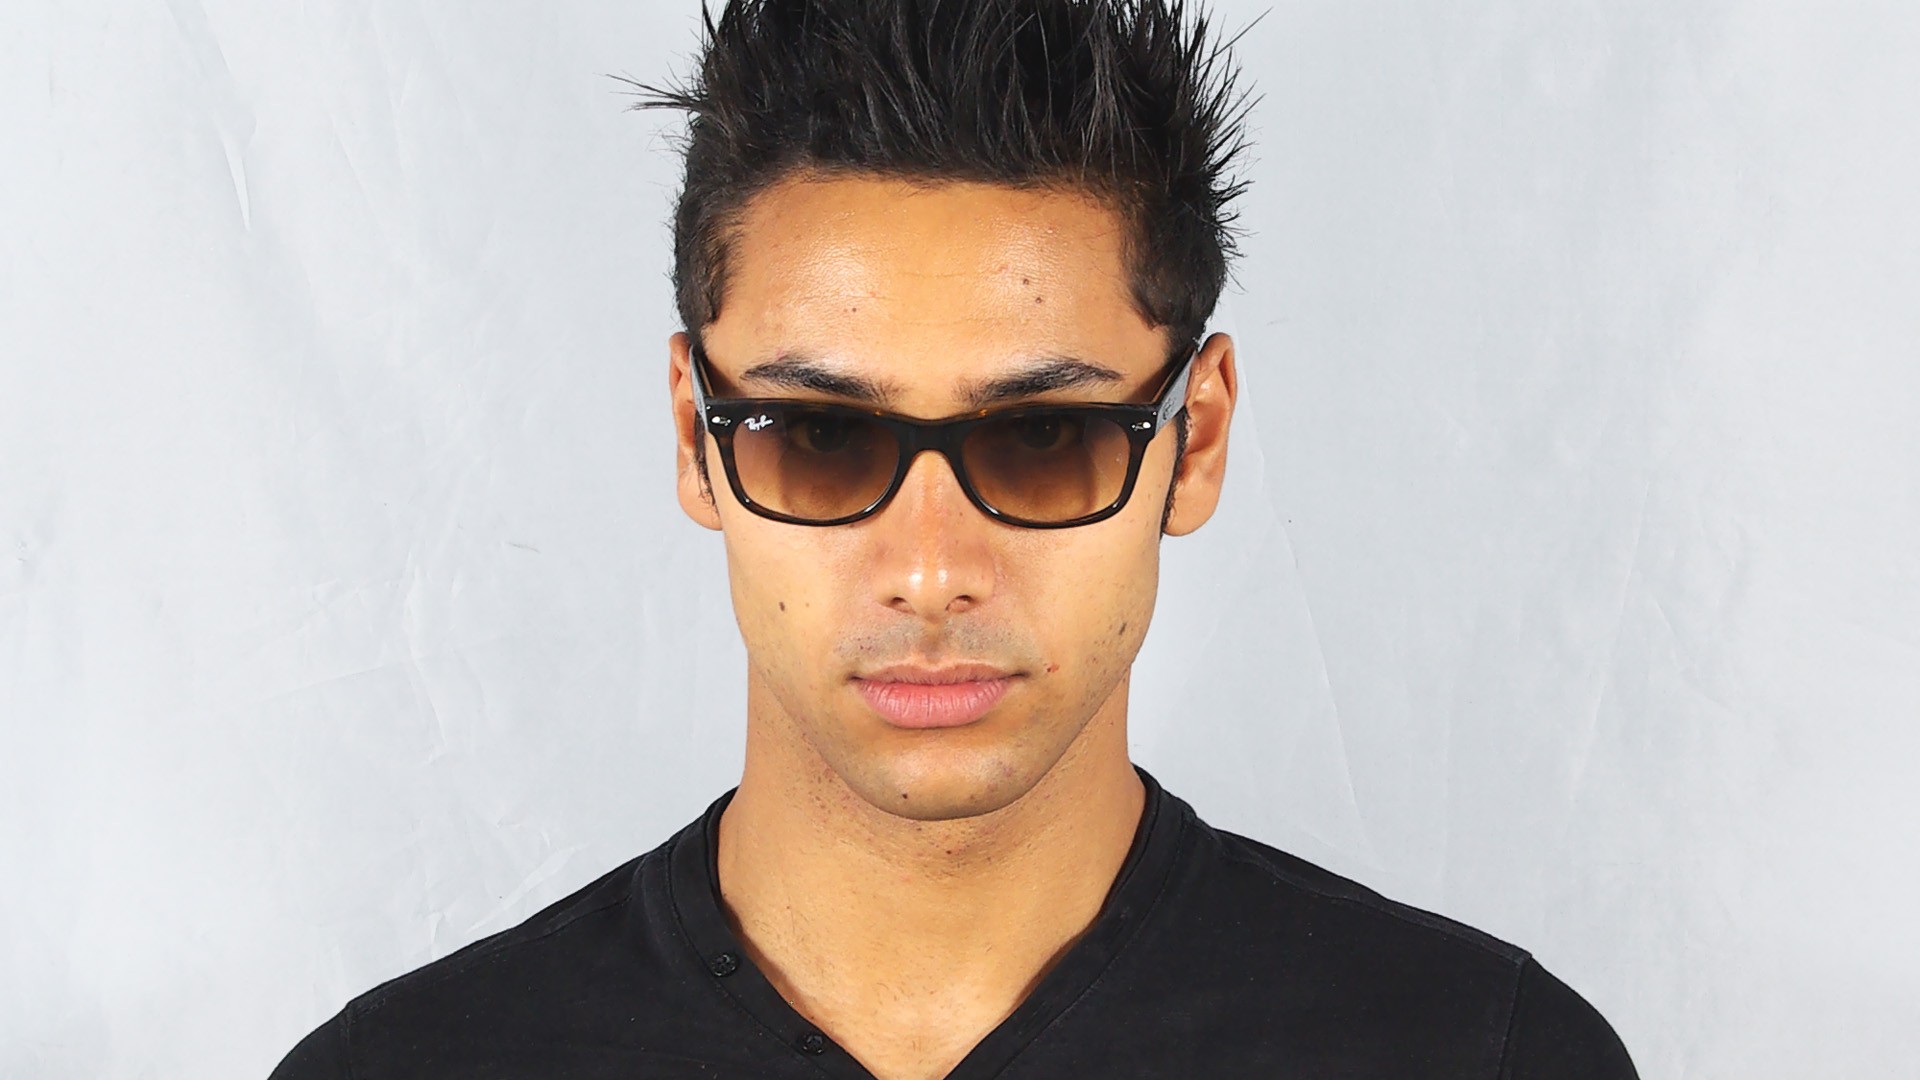 Sunglasses Ray Ban New Wayfarer Tortoise Rb2132 710 51 52 18 Gradient In Stock Price 74 92